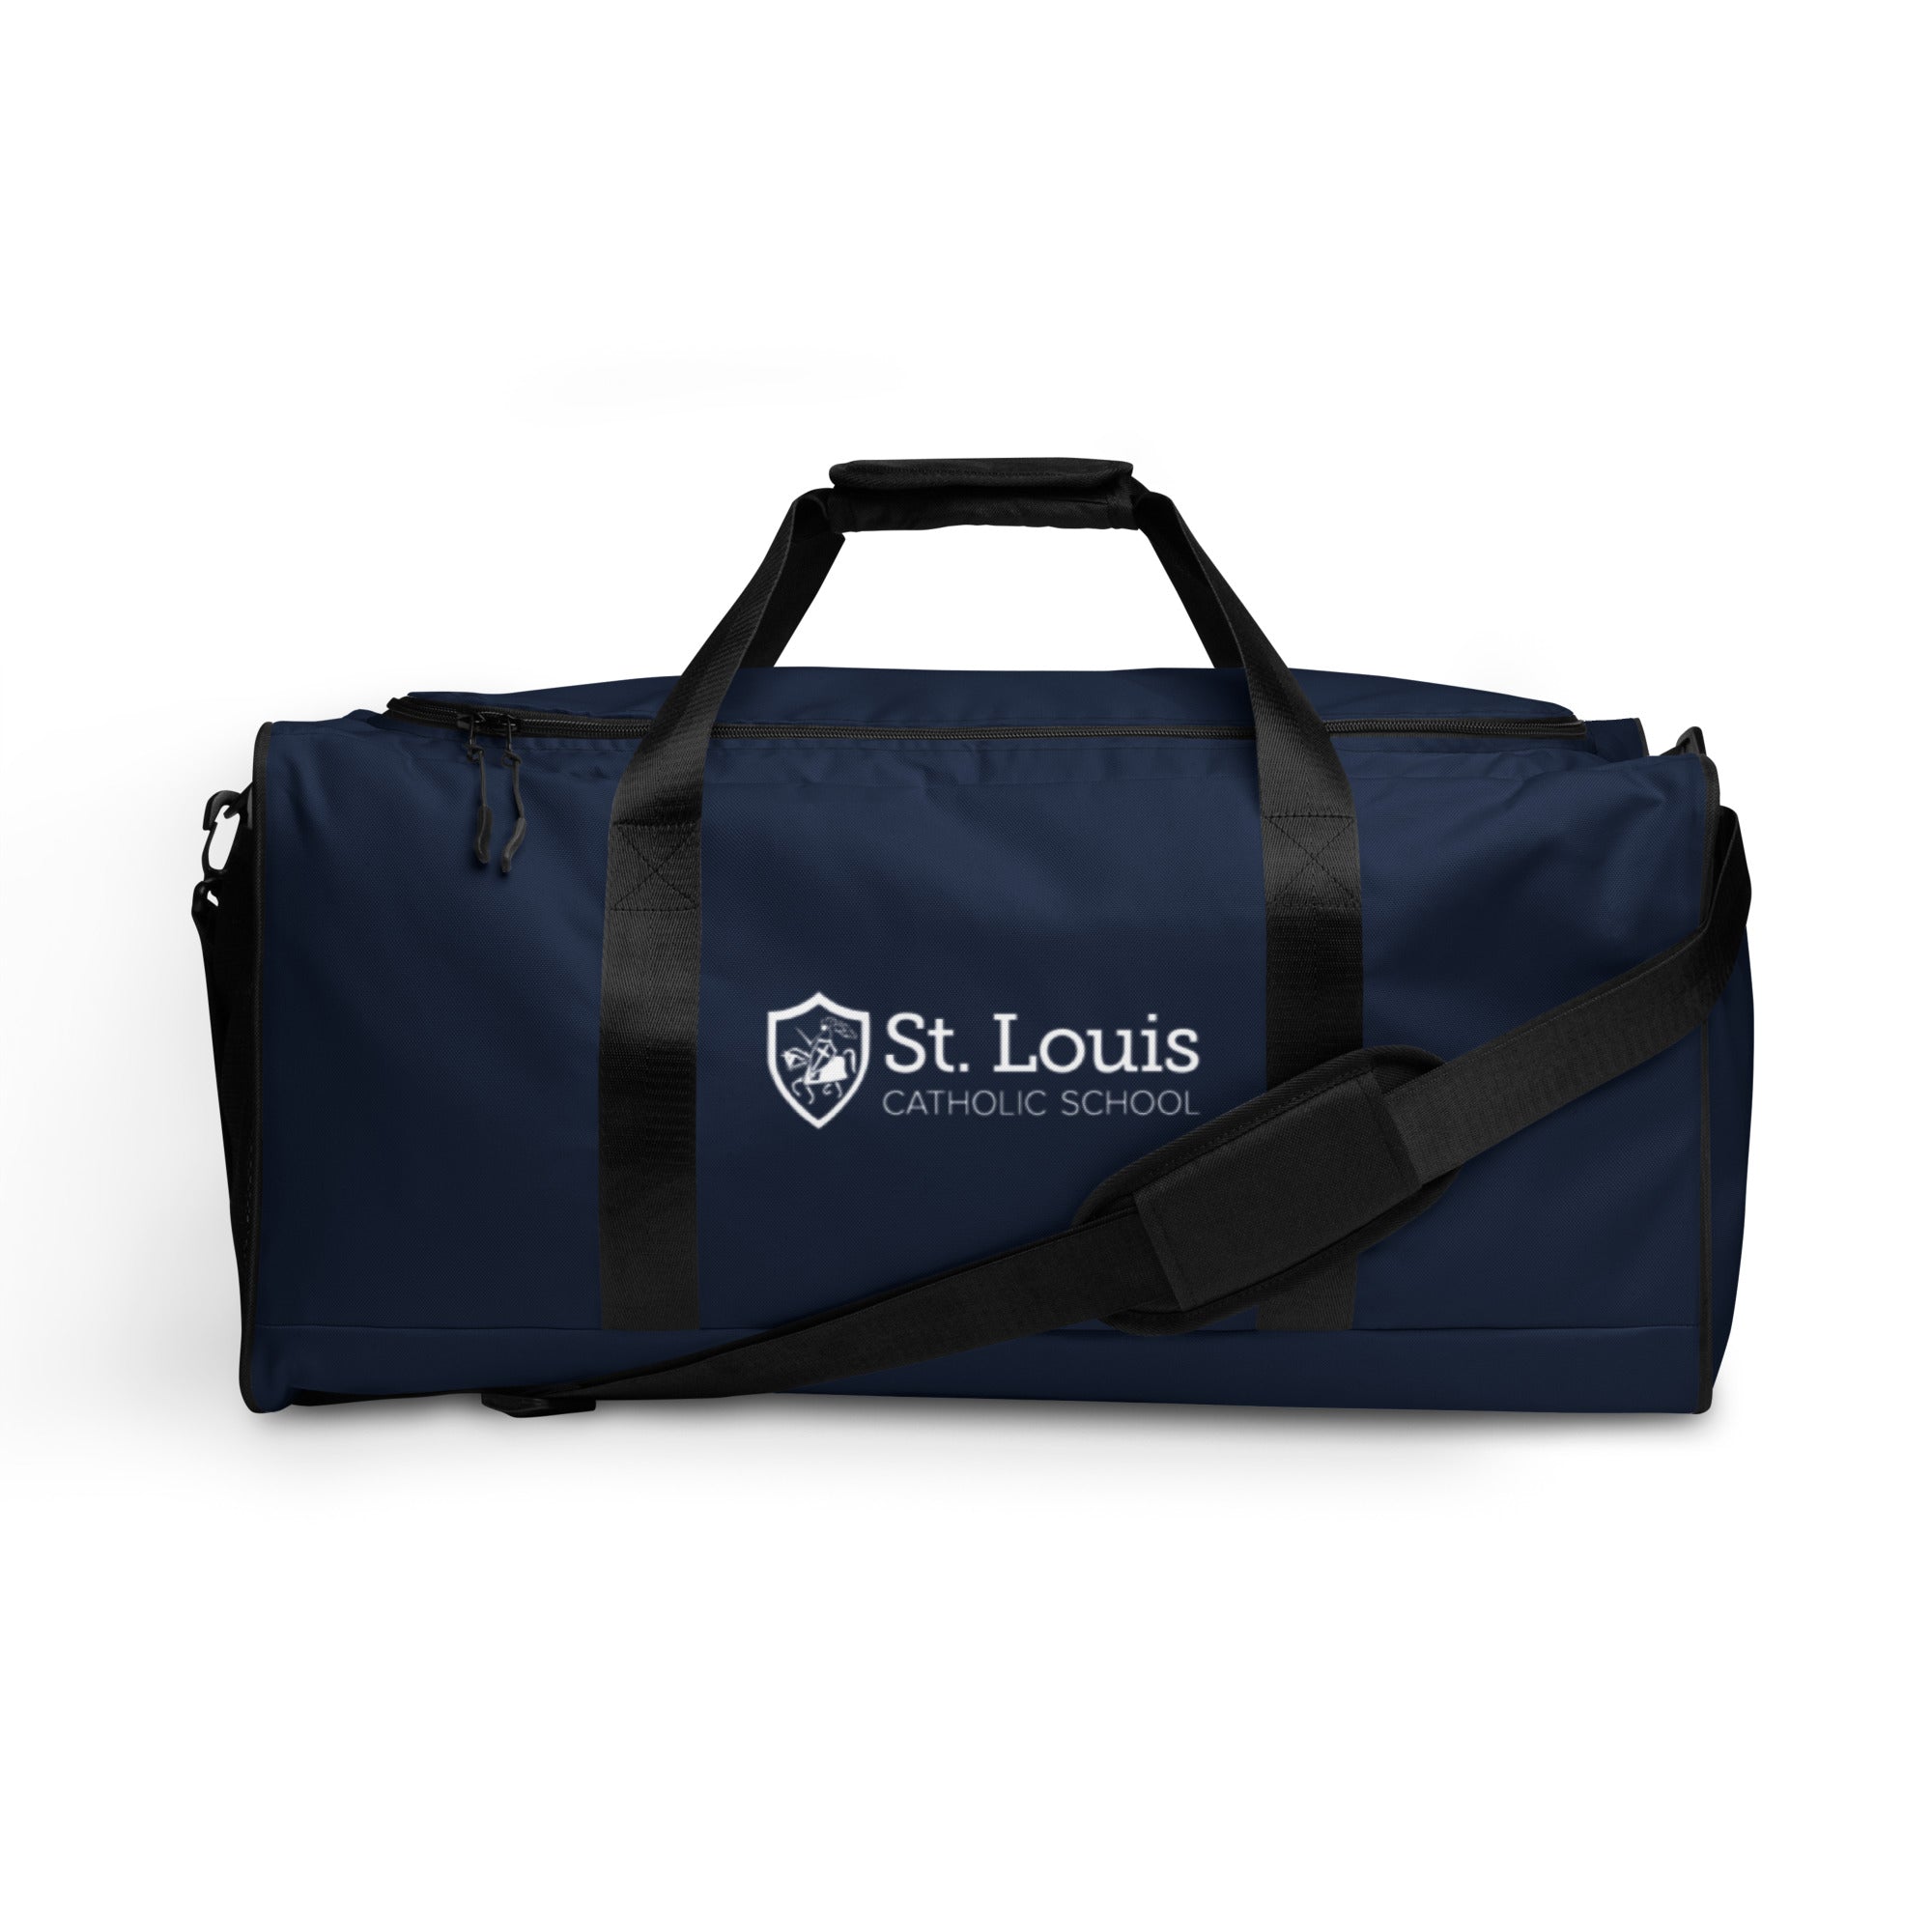 SLCS Duffle bag